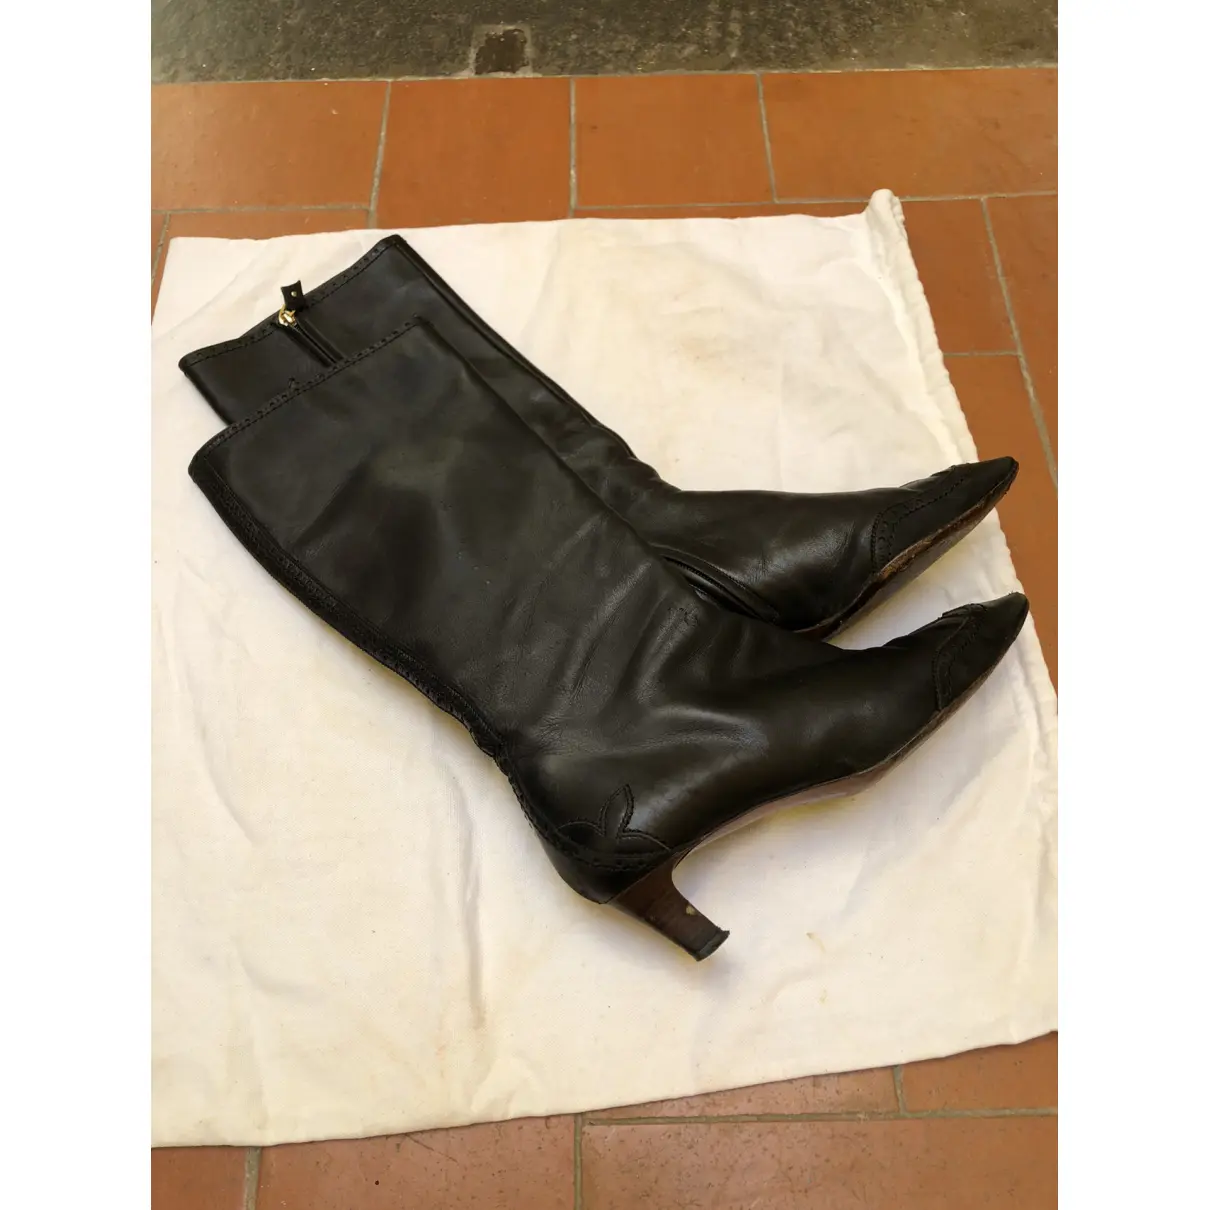 Buy Louis Vuitton Leather boots online